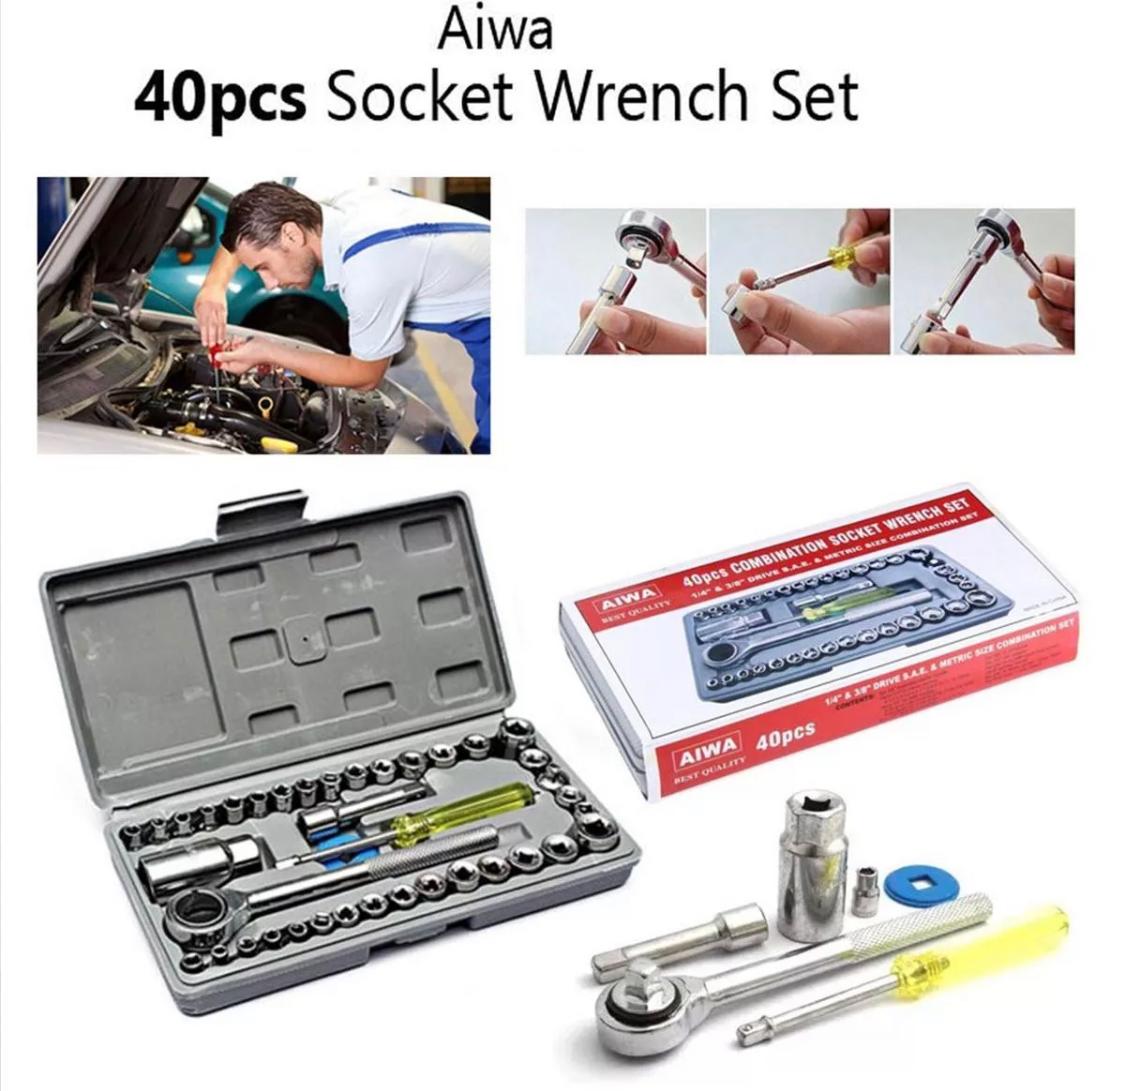 40 Pcs Socket Wrench Set Aiwa Tool Kit AurDekhao.pk